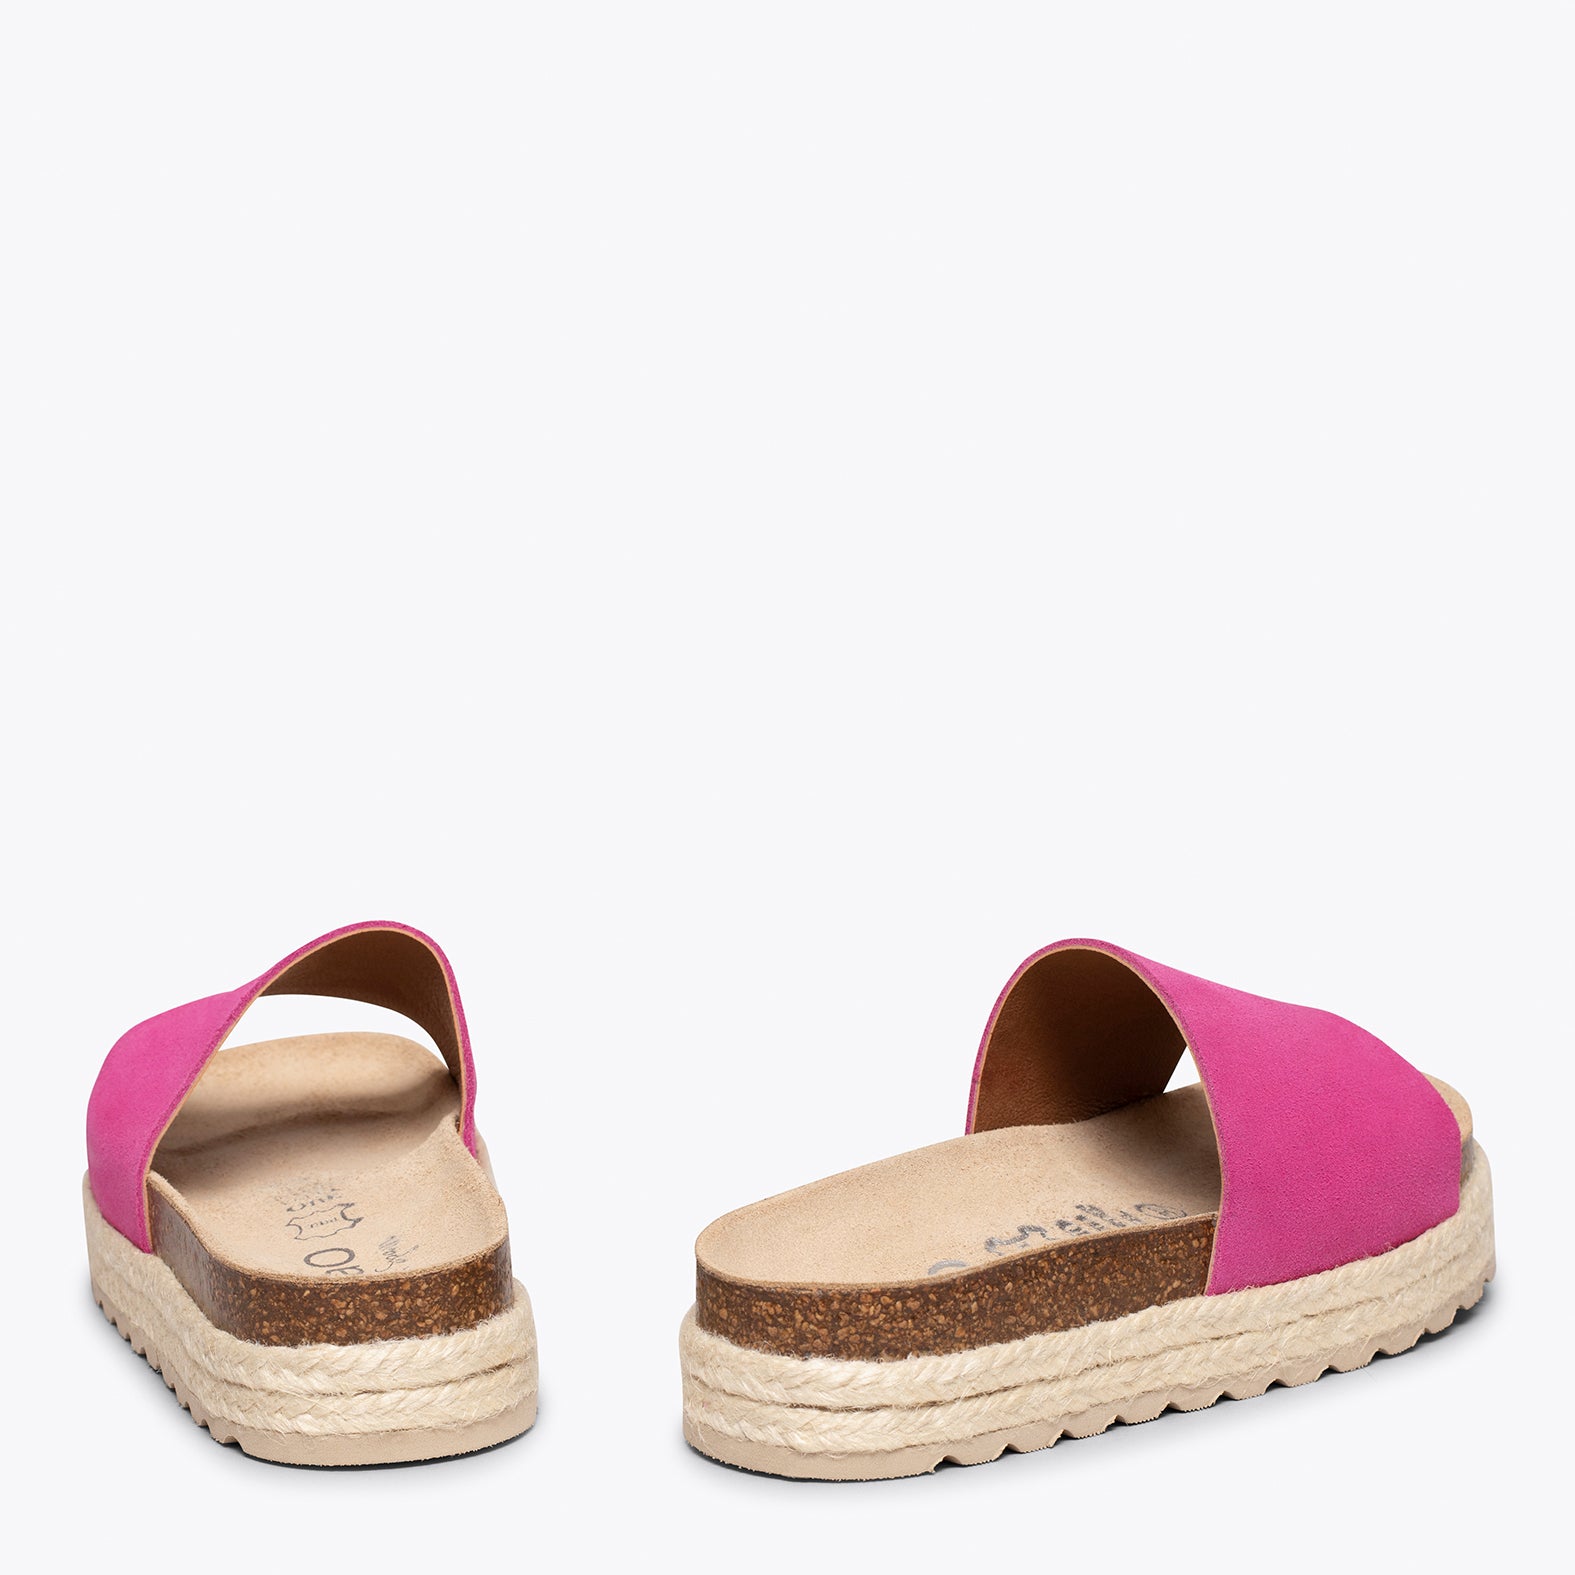 STRAWBERRY – FUCHSIA flat sandals for girls